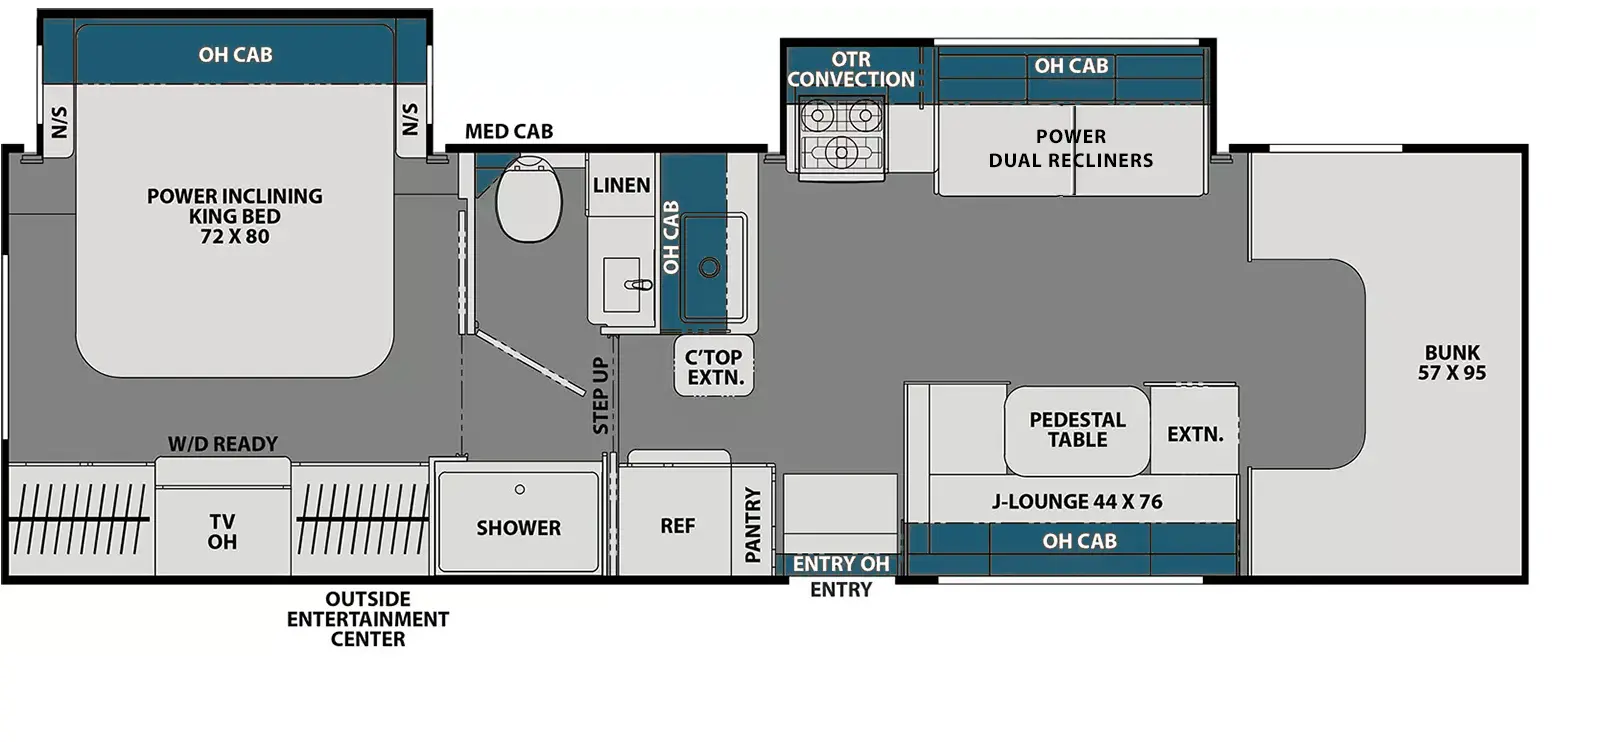 330DS Floorplan Image